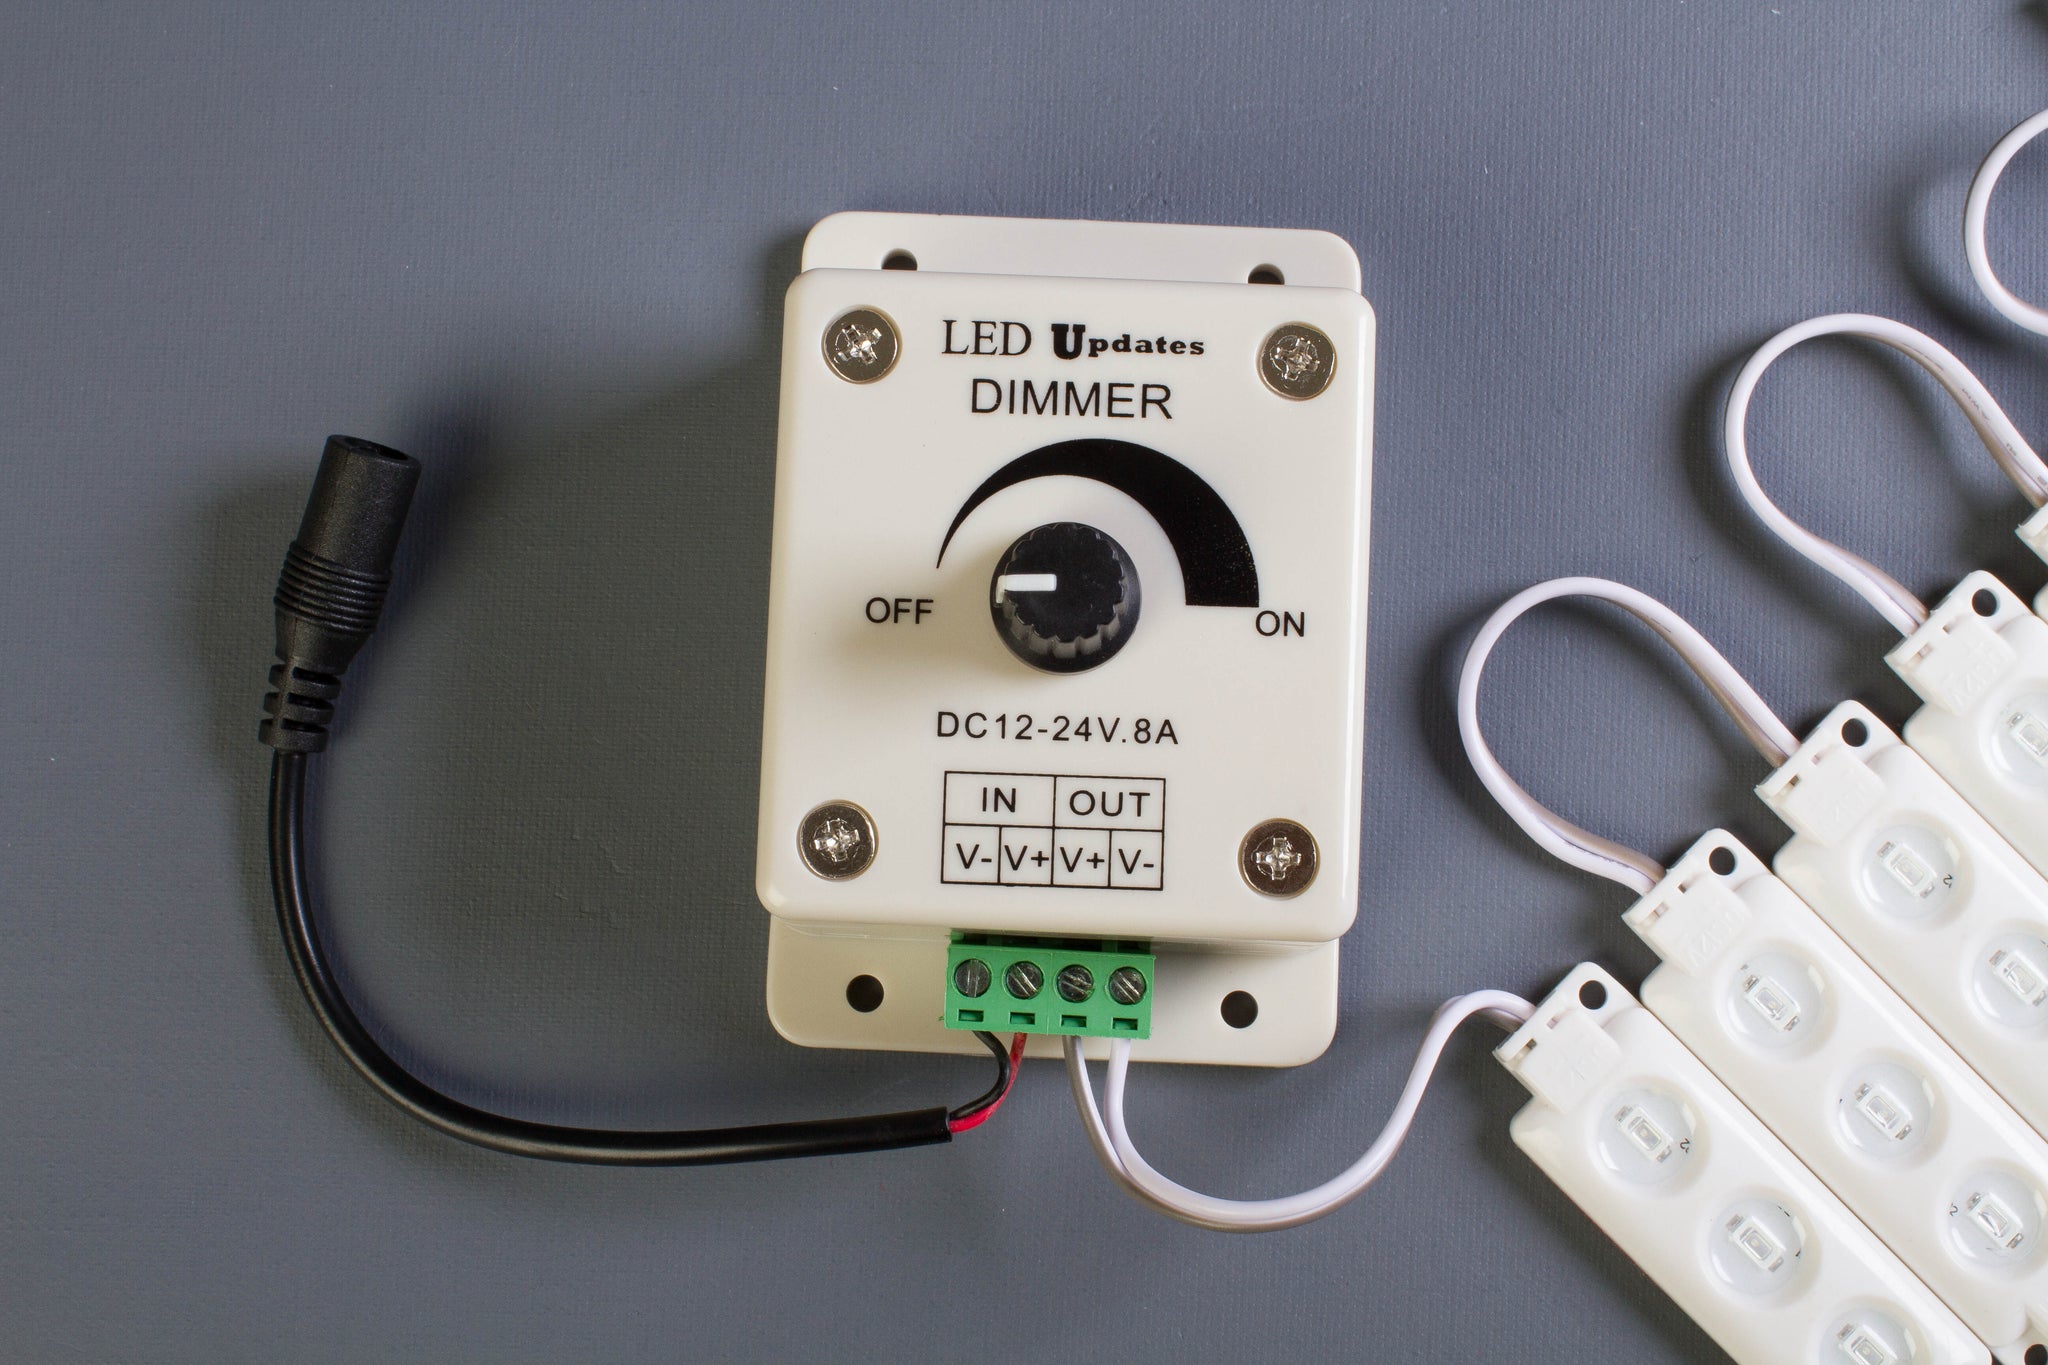 Single color LED light dimmer switch | LEDUpdates